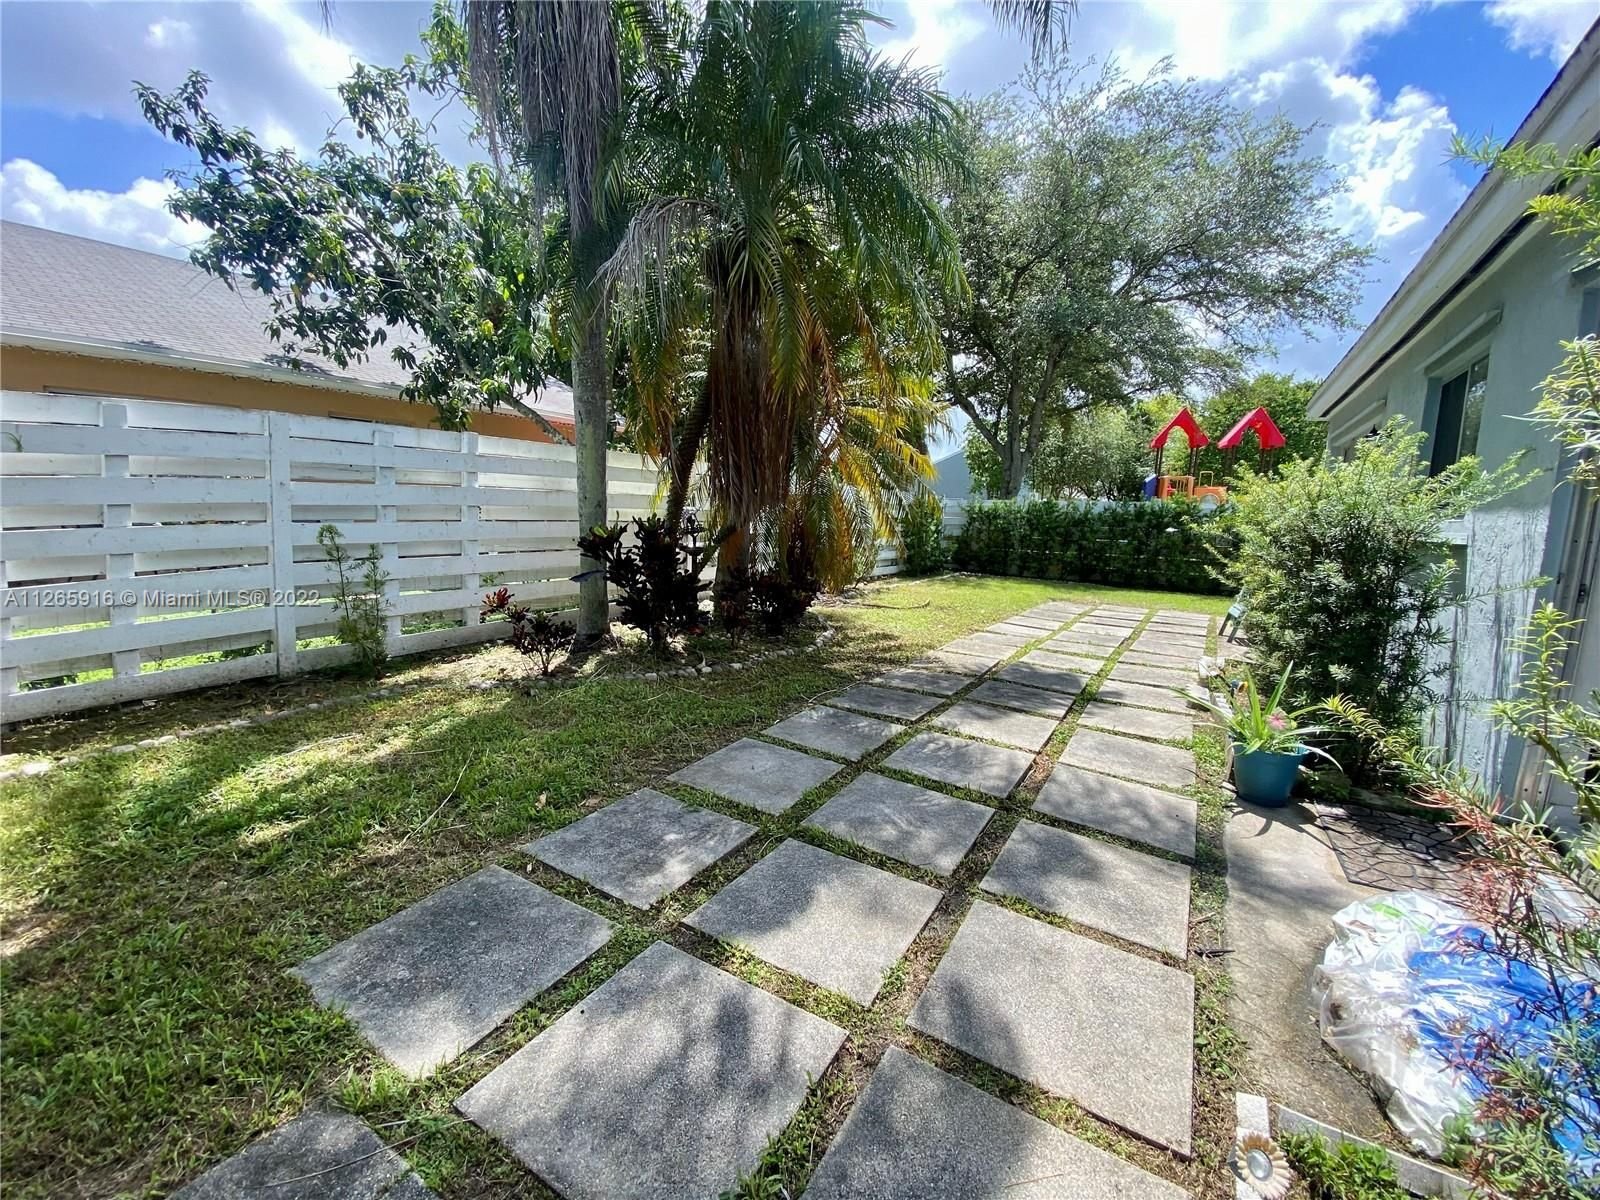 Real estate property located at 14463 138th Ct, Miami-Dade County, Miami, FL